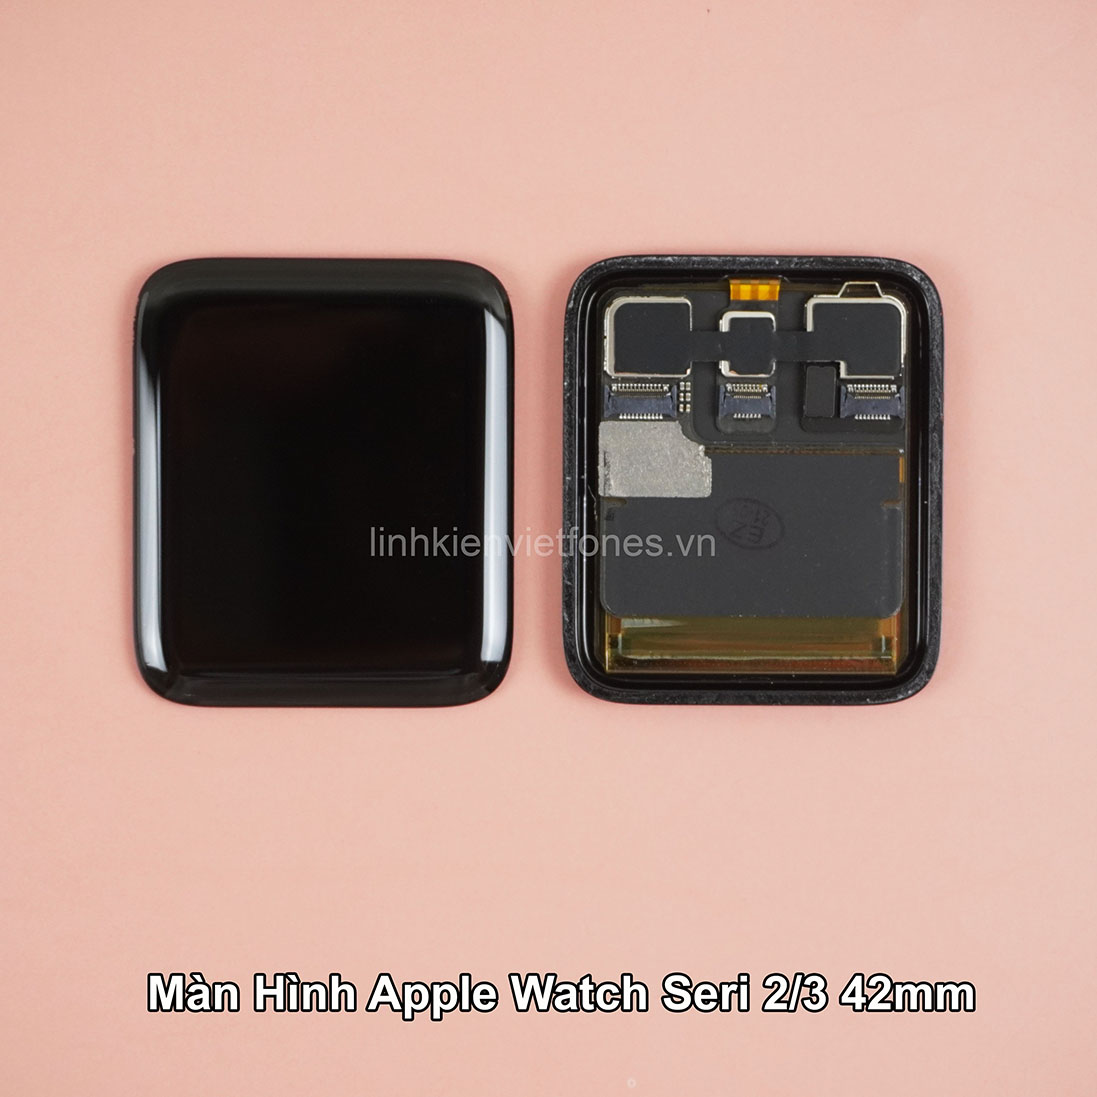 Màn hình Apple watch series 2 / series 3 - 42mm (ép kính) - linhkienvietfones.vn